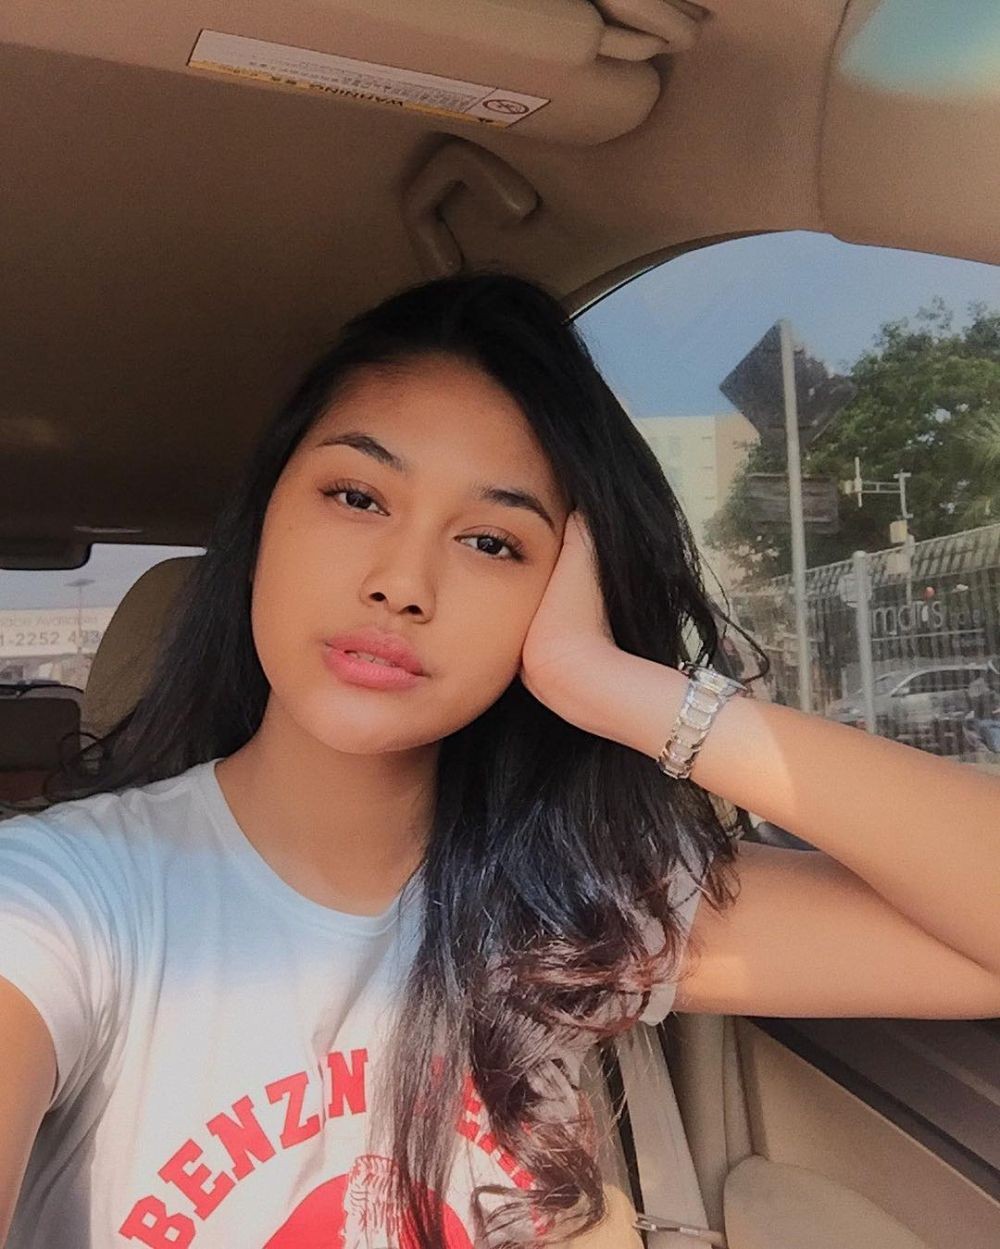 Berusia 18 Tahun, 10 Potret Memikat Princess, Miss Indonesia 2019